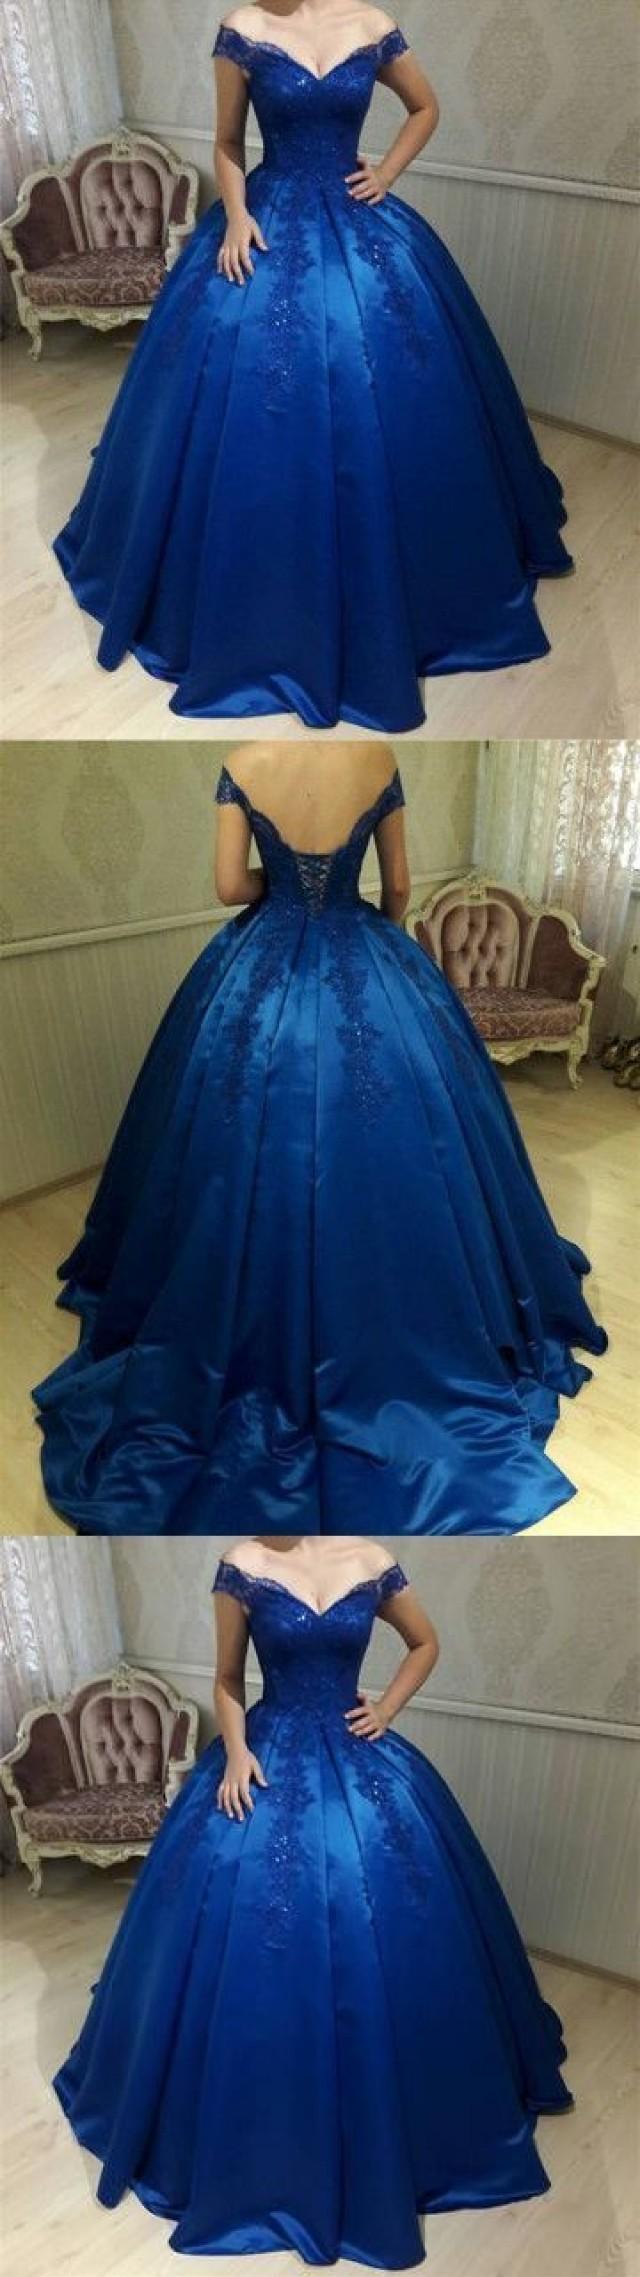 Satin Prom Dresses Sexy Royal Blue ...